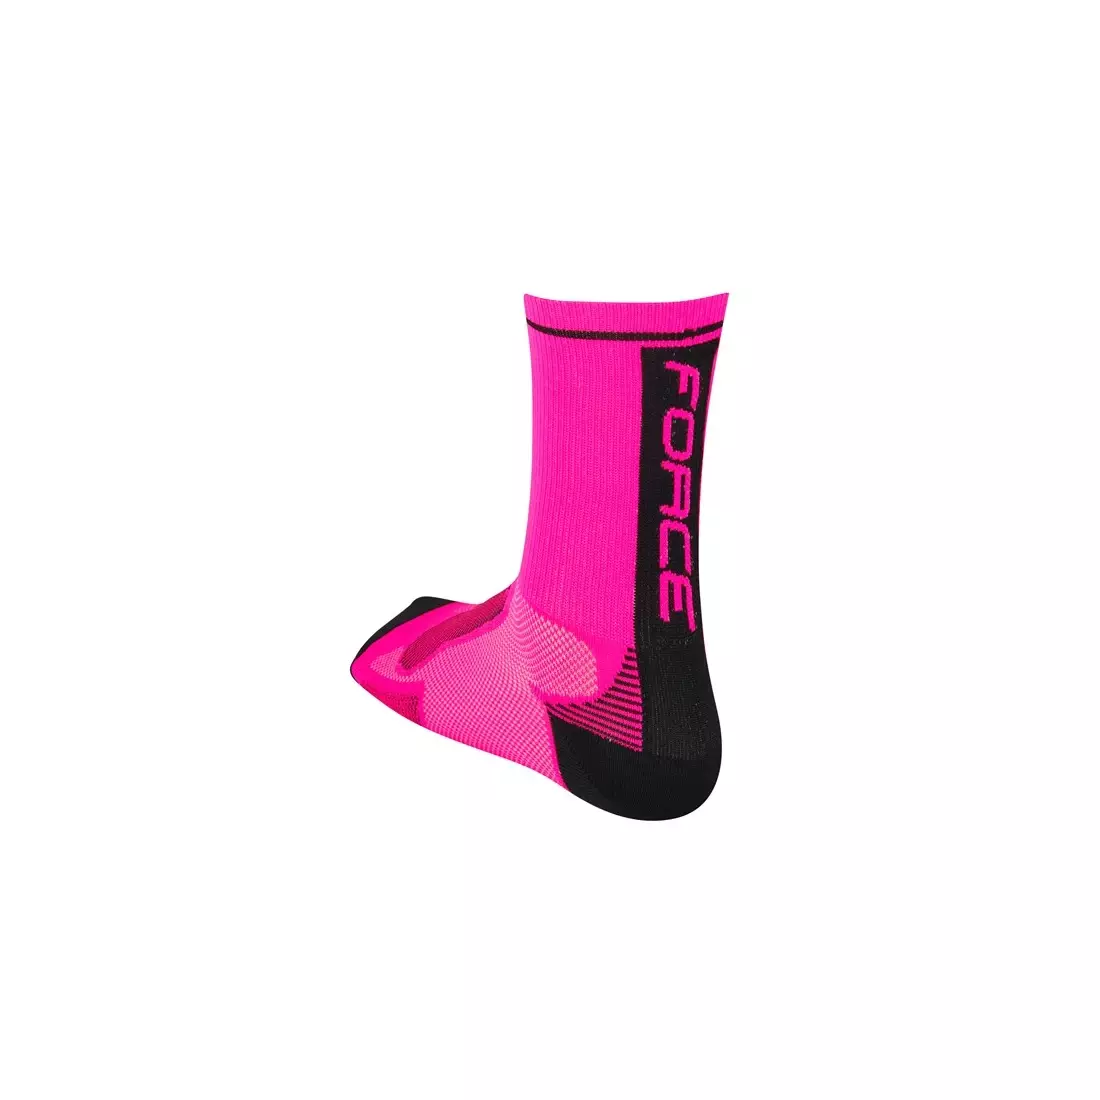 FORCE LONG pink sports socks